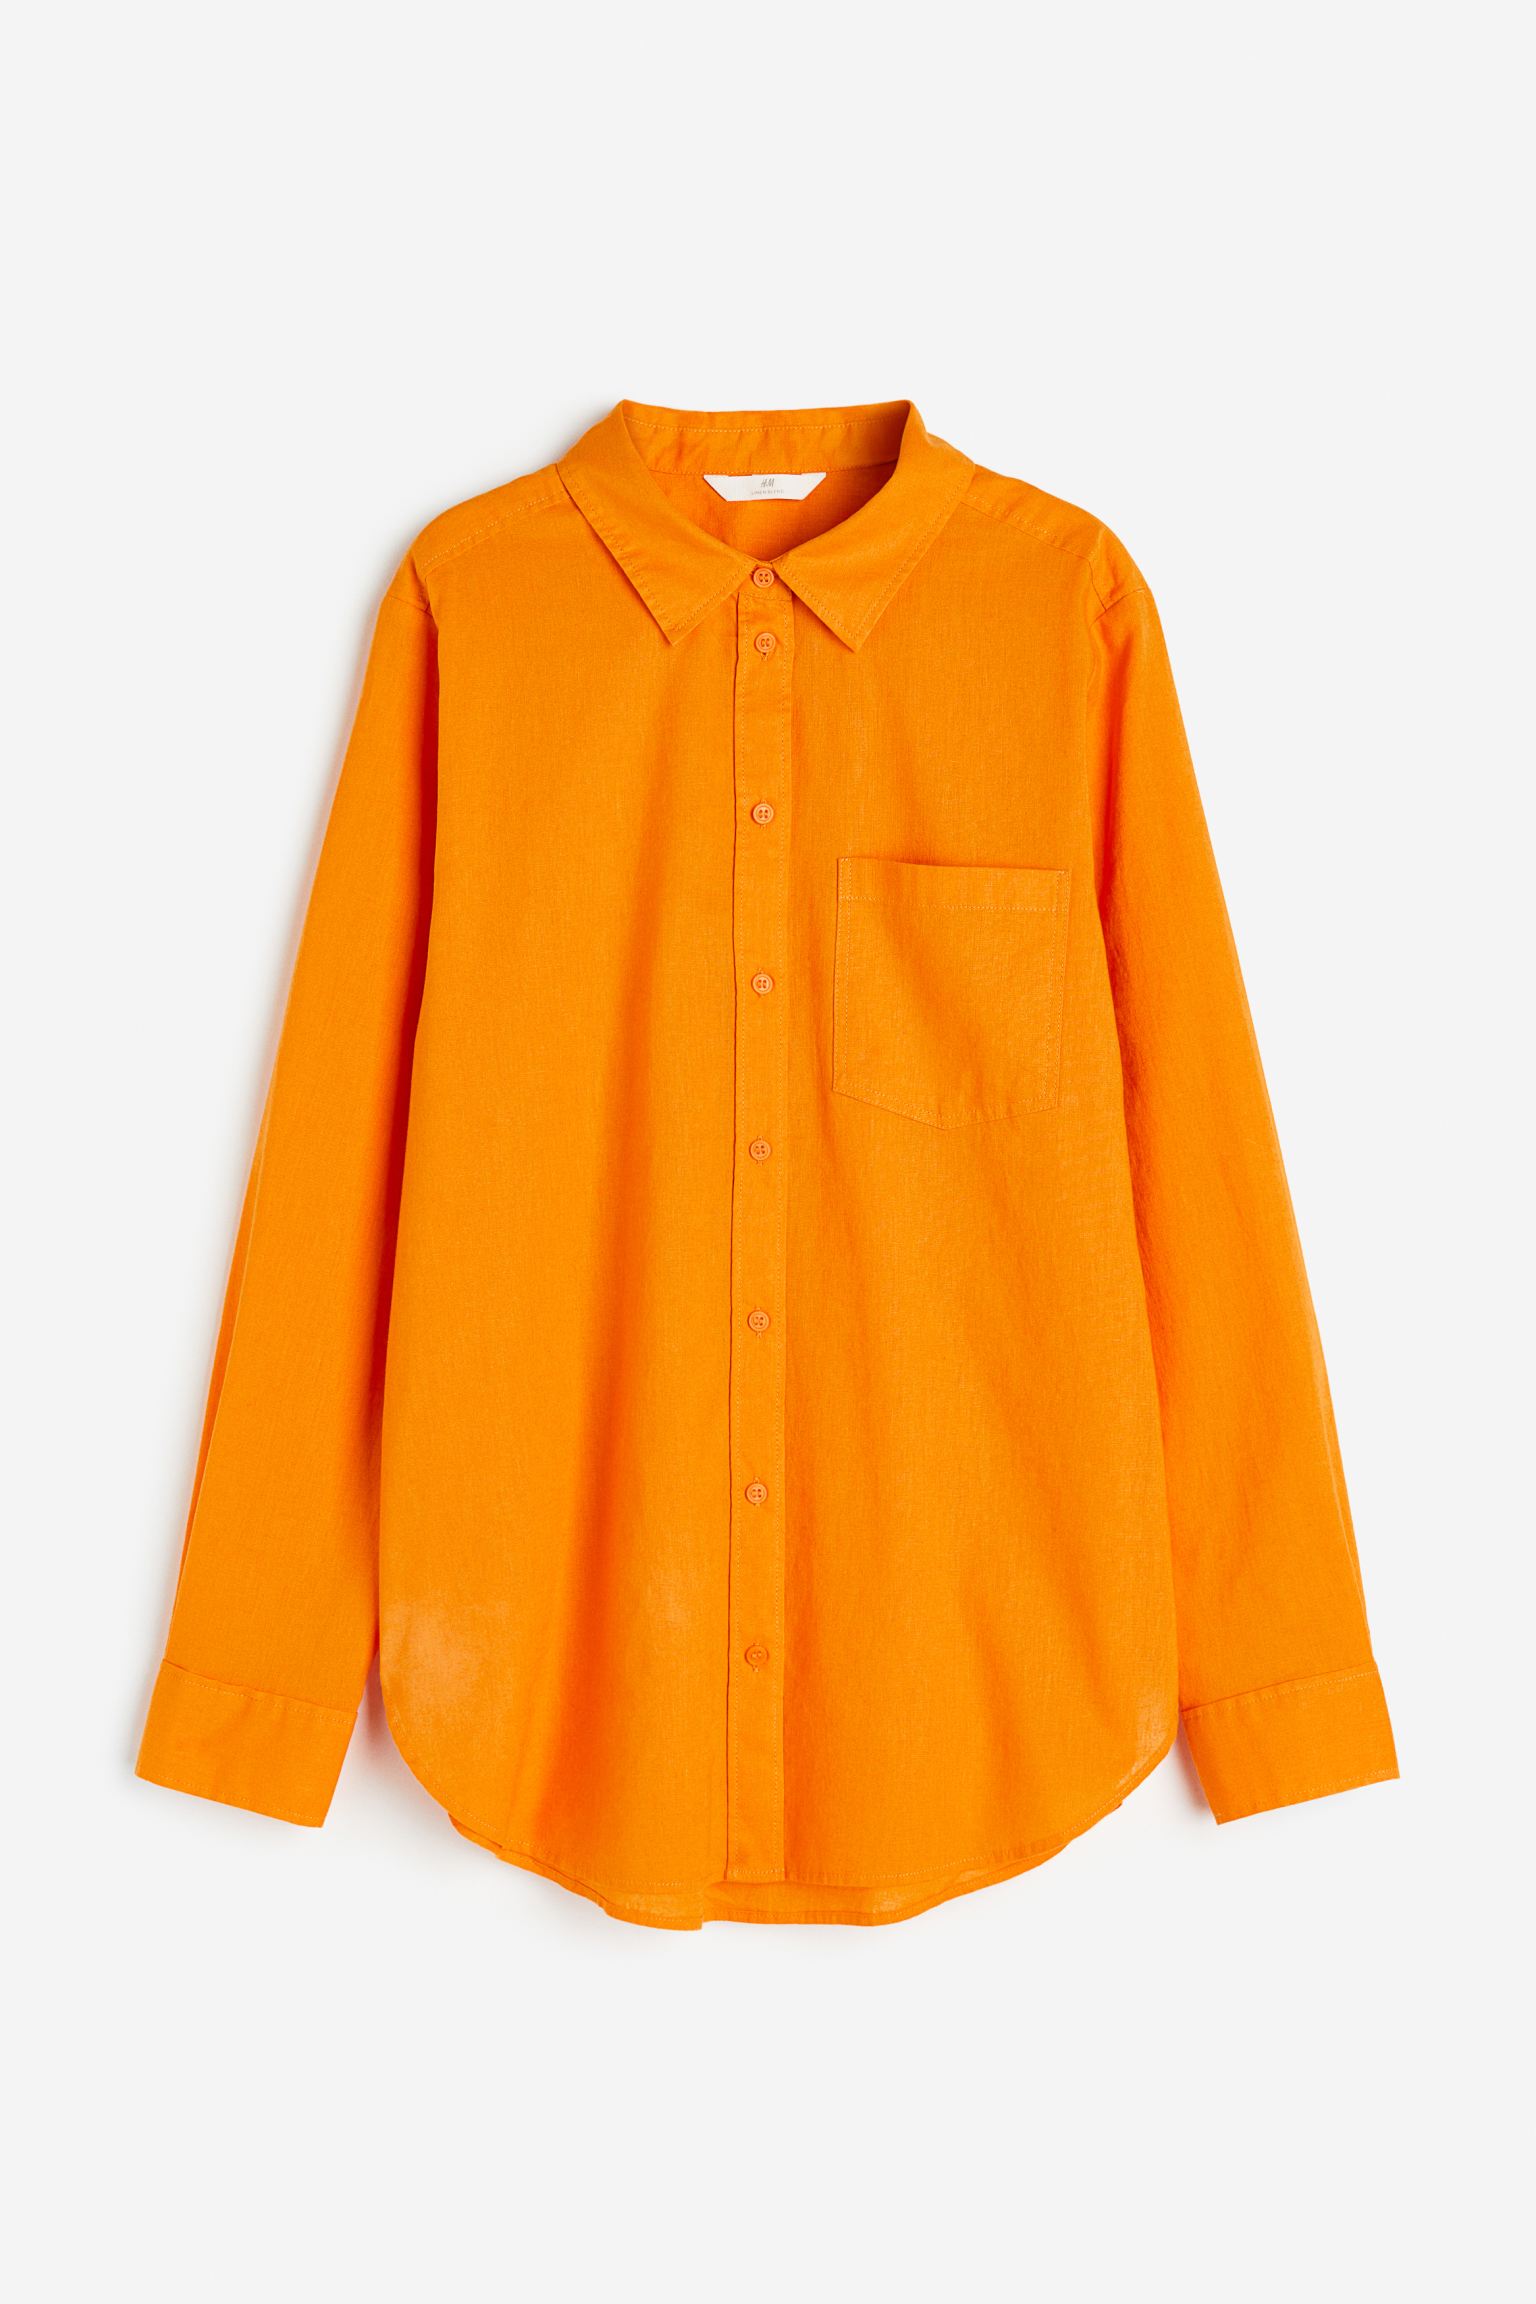 Рубашка женская H&M 1027844023 оранжевая M (доставка из-за рубежа)